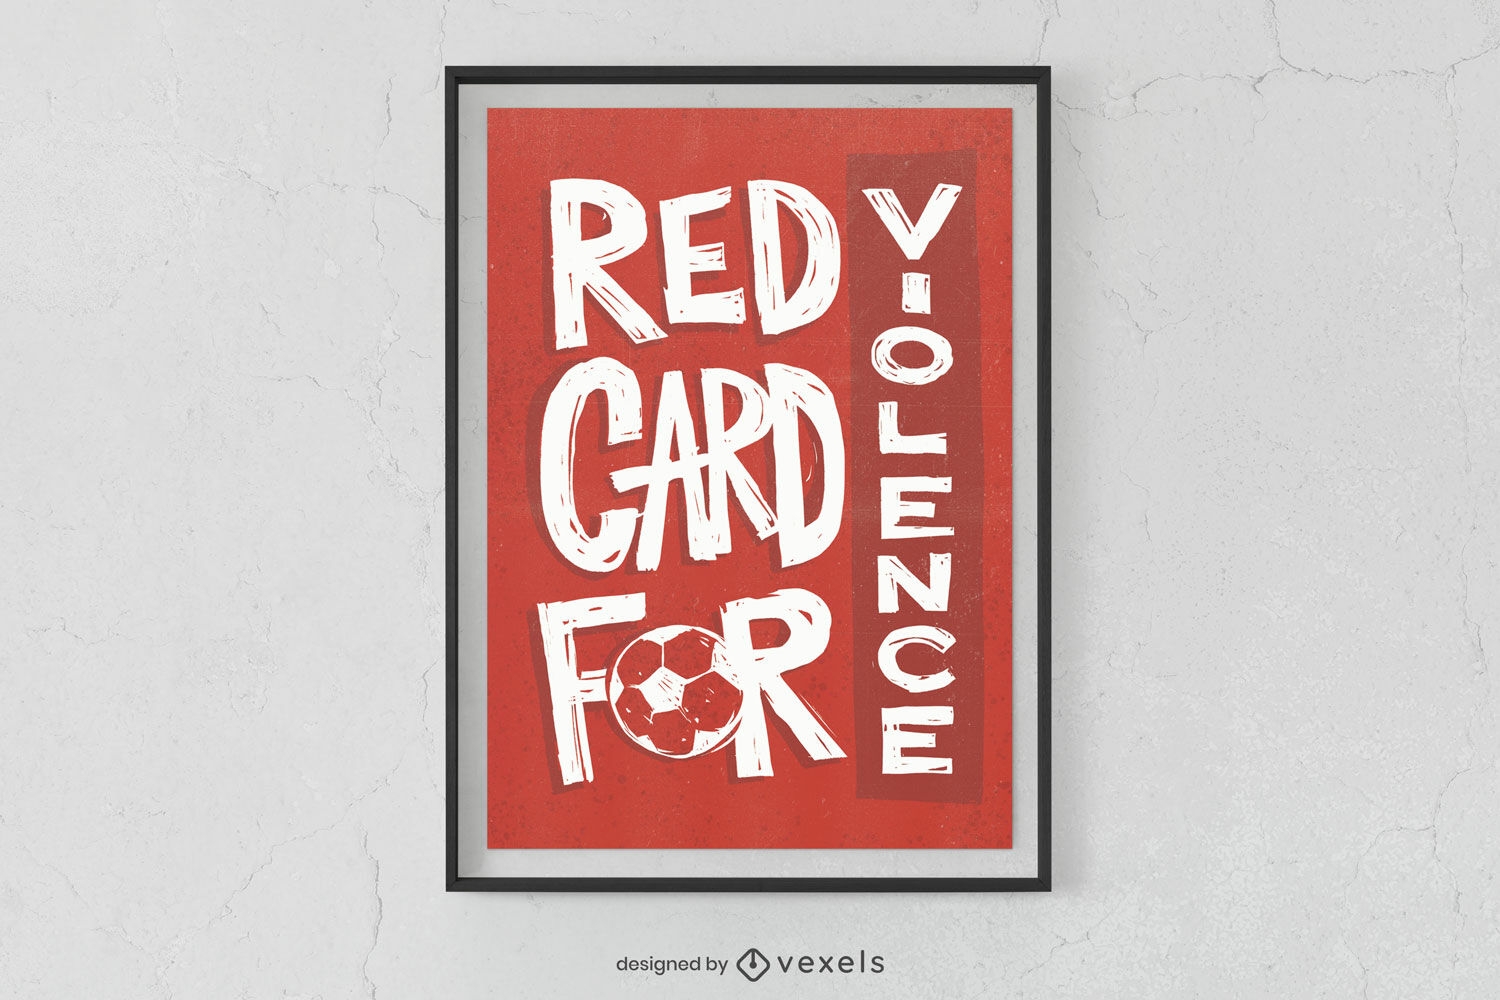 Red card football match poster design